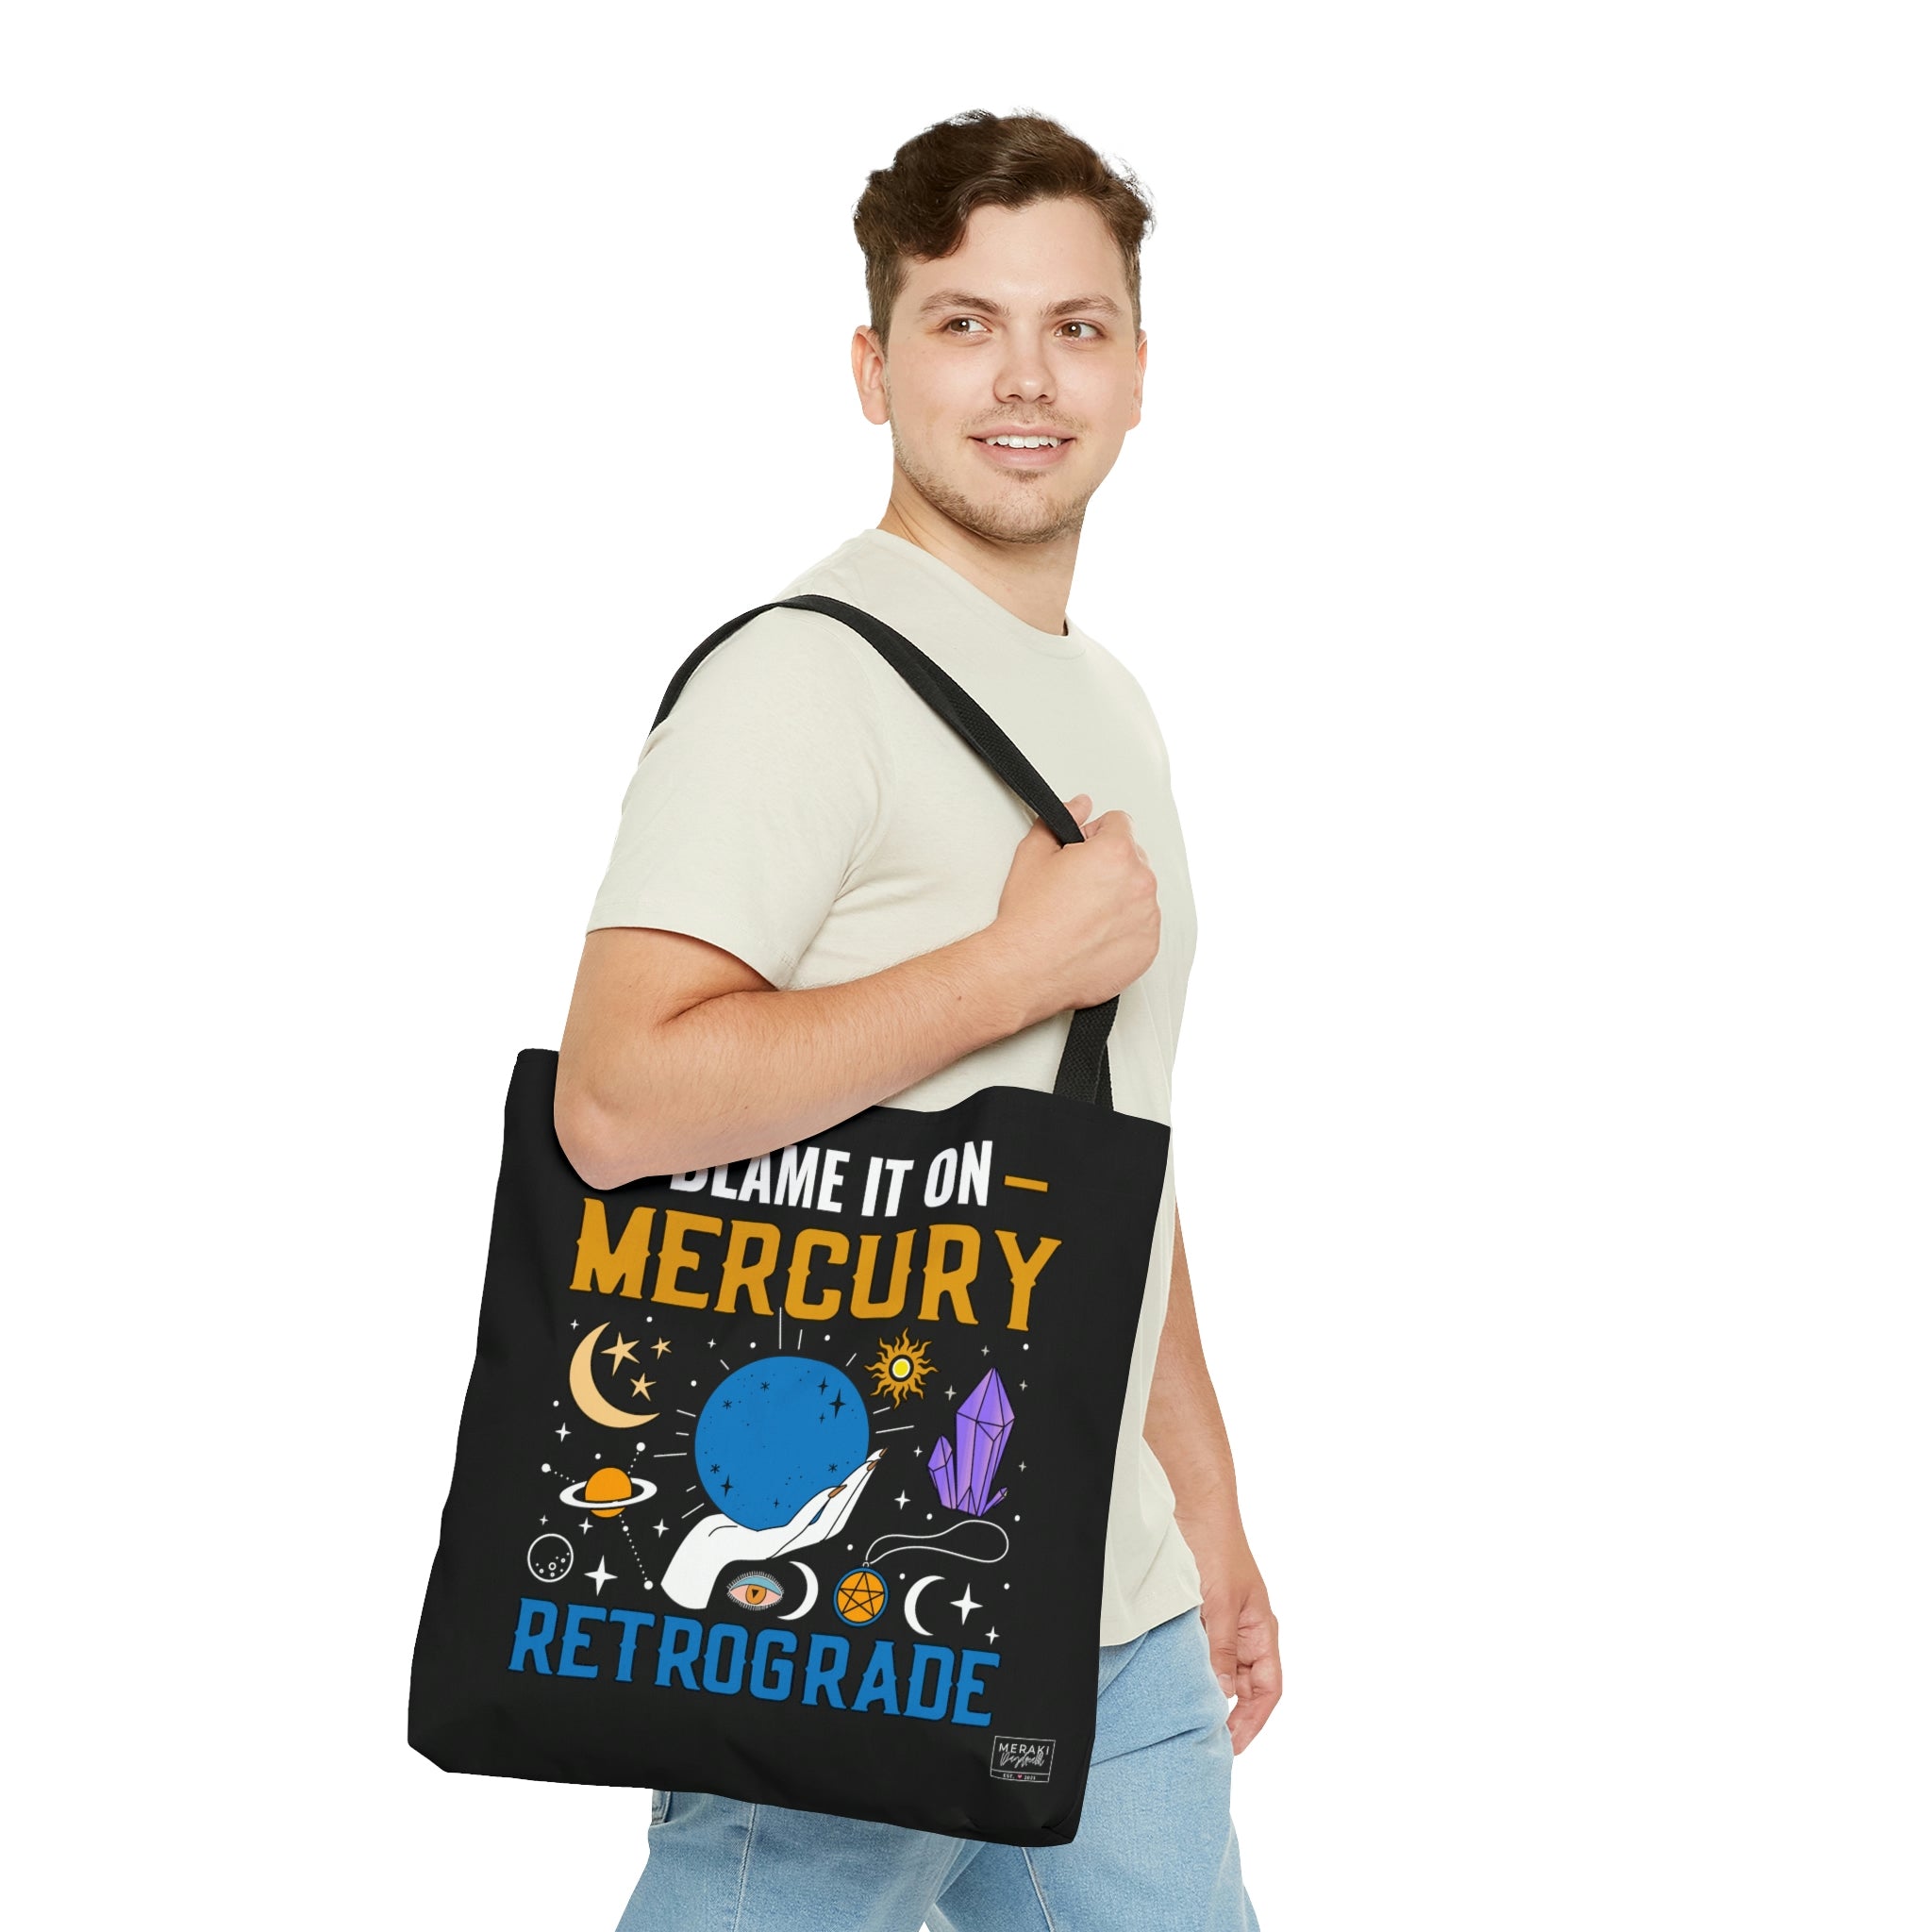 Blame It On Mercury Retrograde Tote Bag - Meraki Daydream